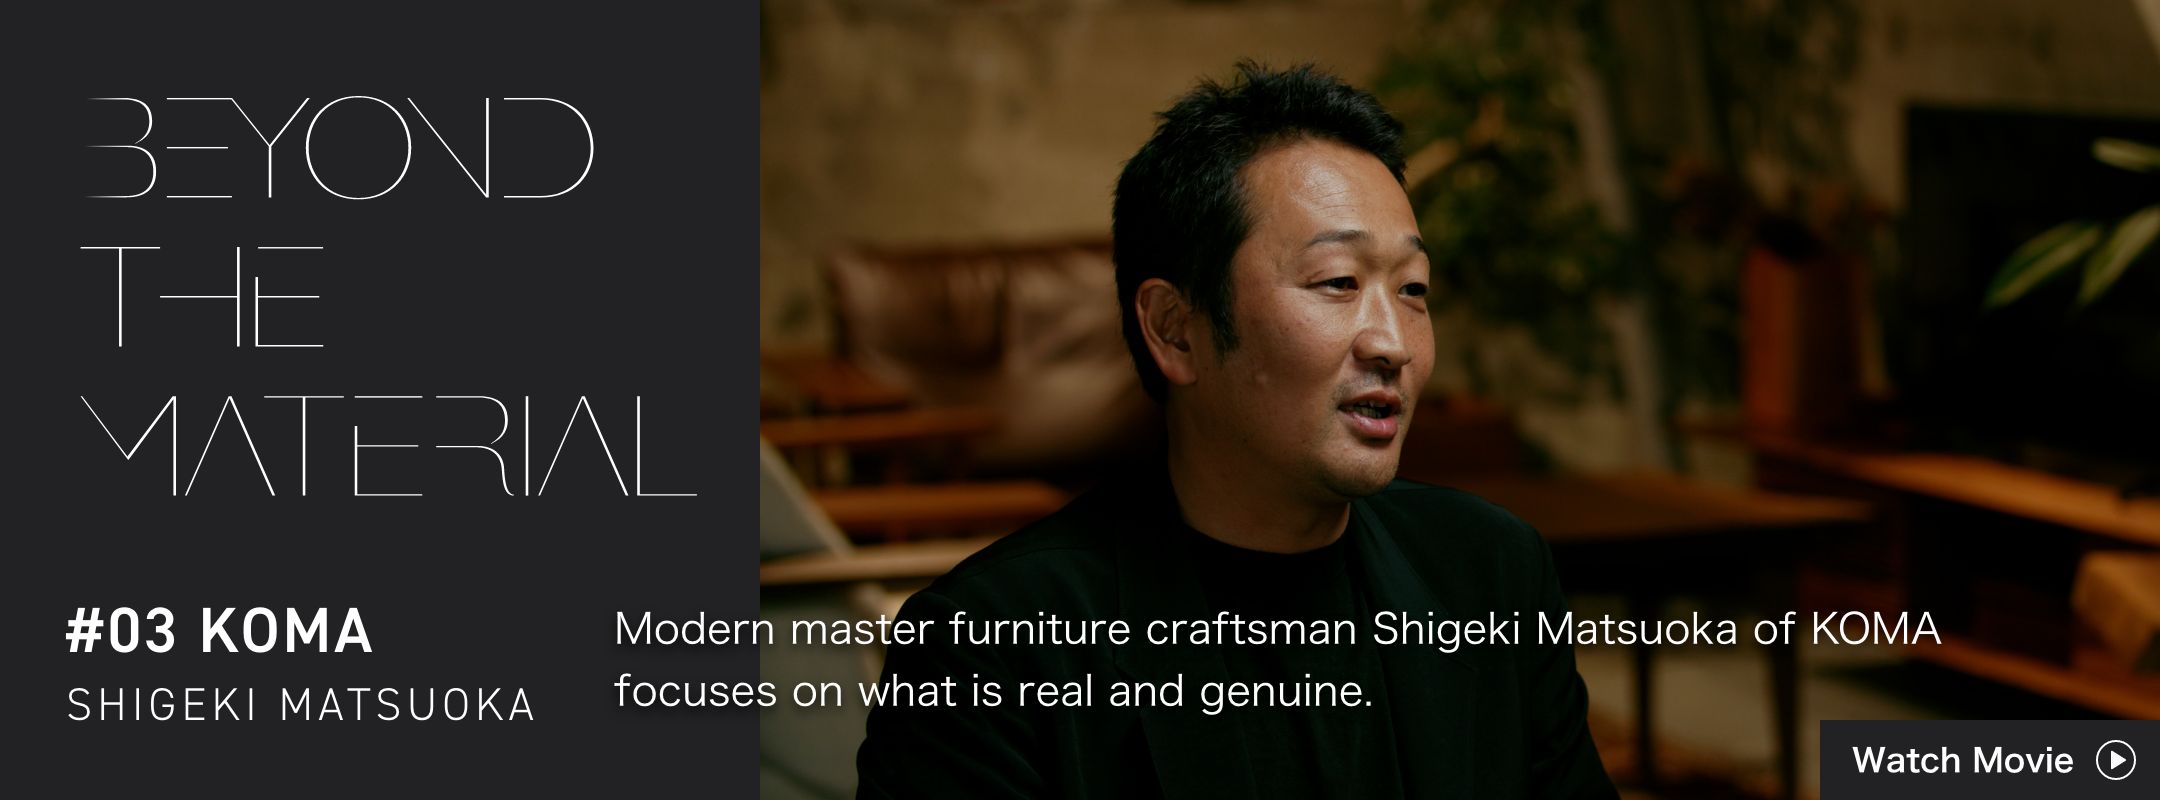 BEYOND THE MATERIAL #03 KOMA SHIGEKI MATSUOKA Modern master furniture craftsman Shigeki Matsuoka of KOMA focuses on what is real and genuine.